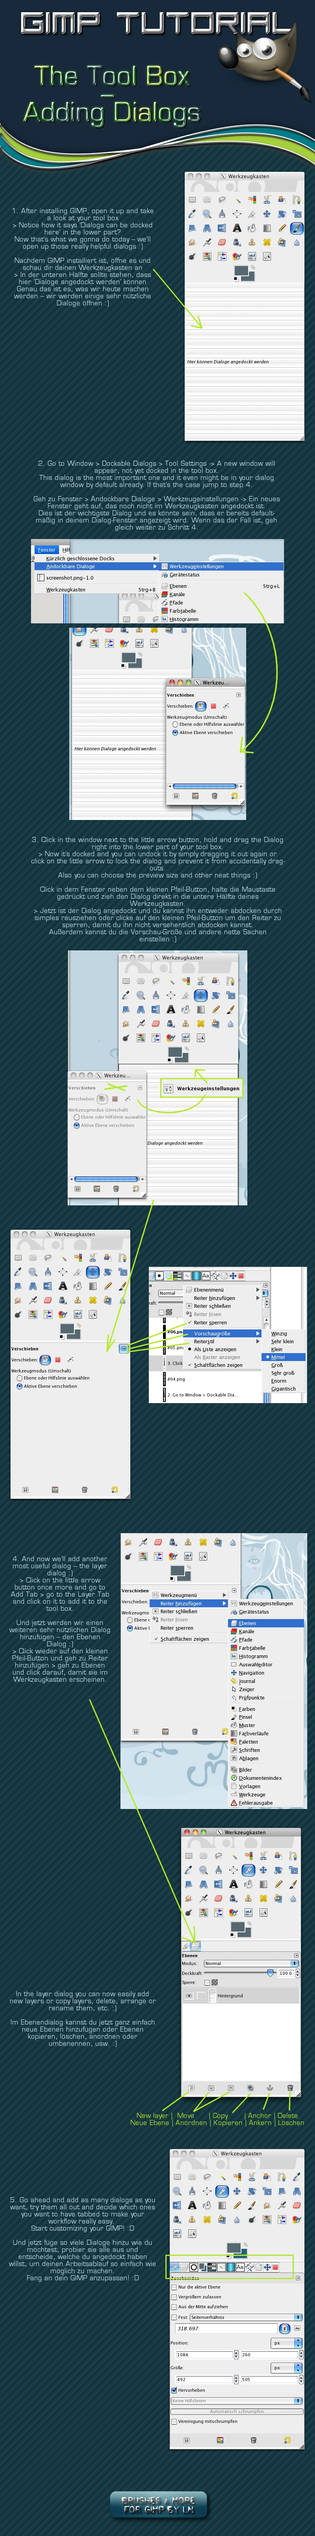 GIMP The Tool Box-Add Dialogs